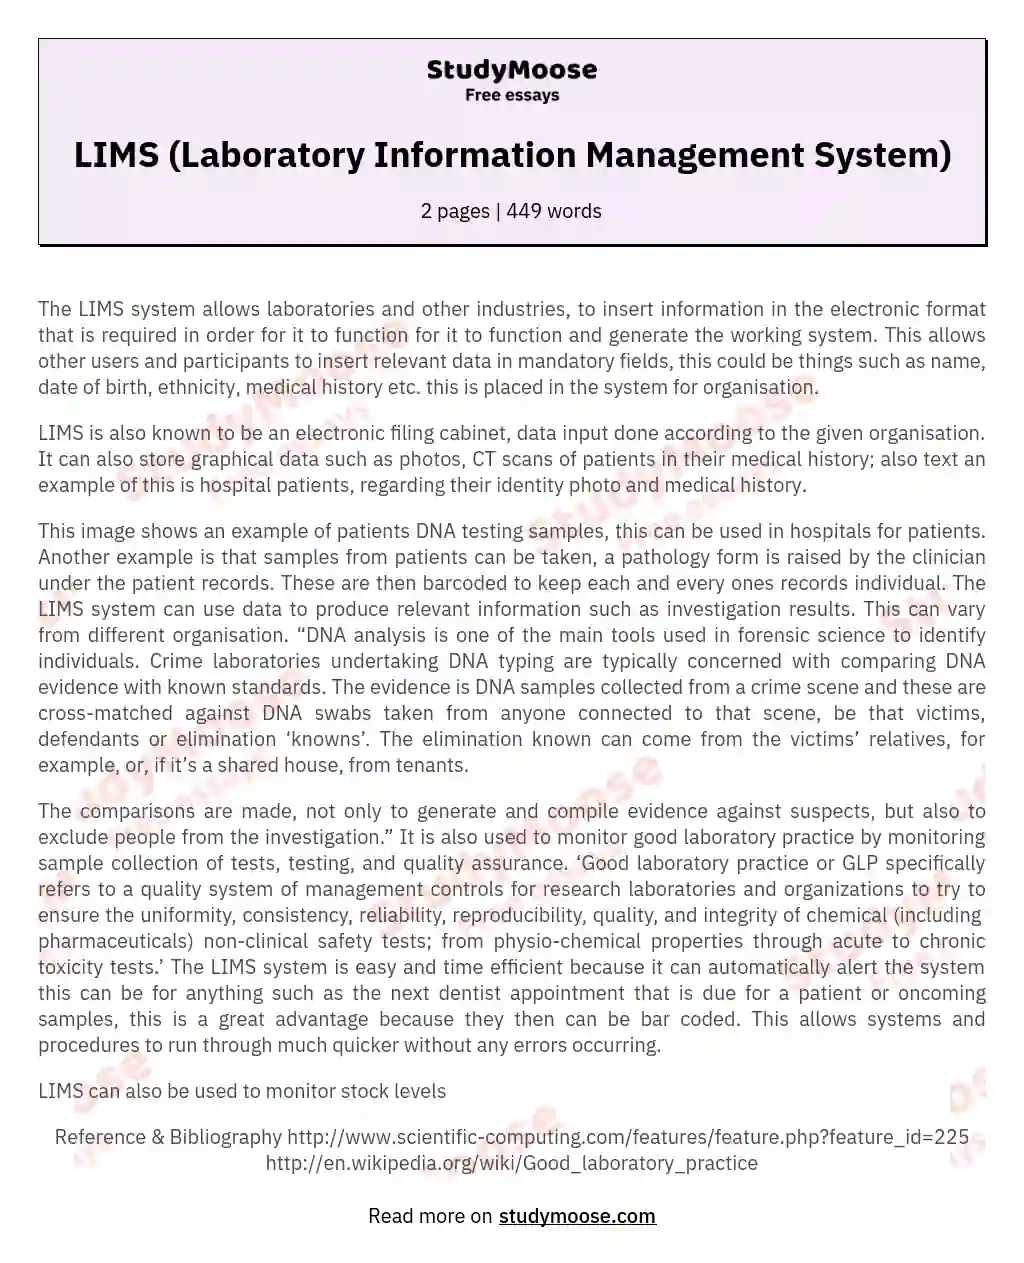 LIMS (Laboratory Information Management System) essay